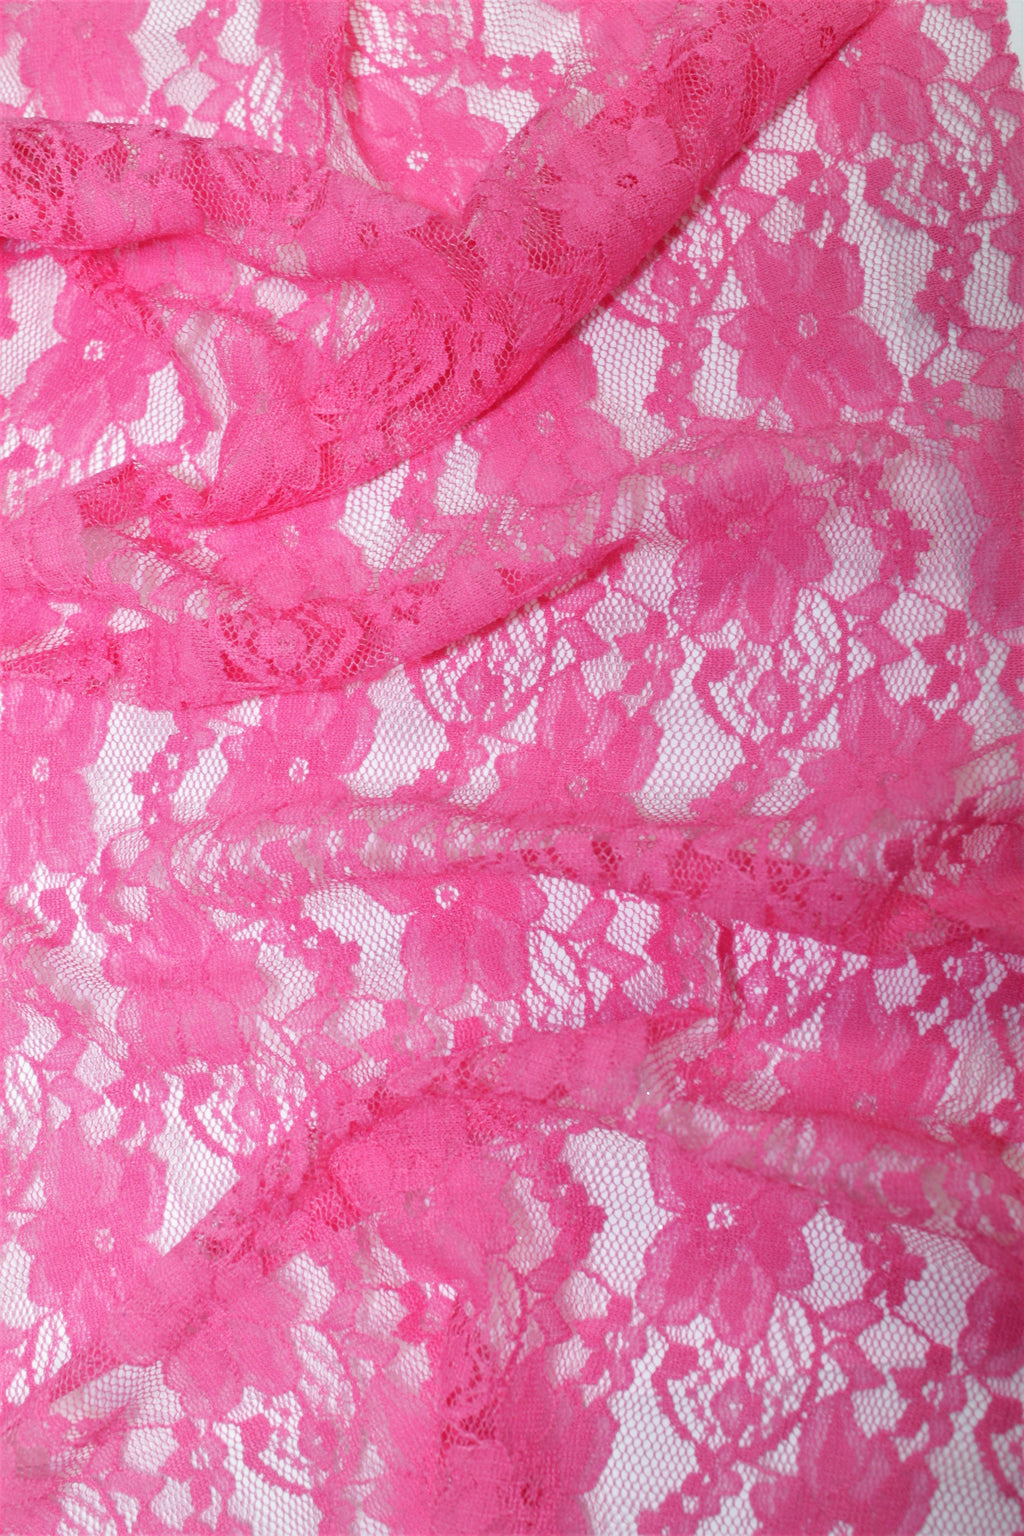 Backless Shrug - Pink Lace